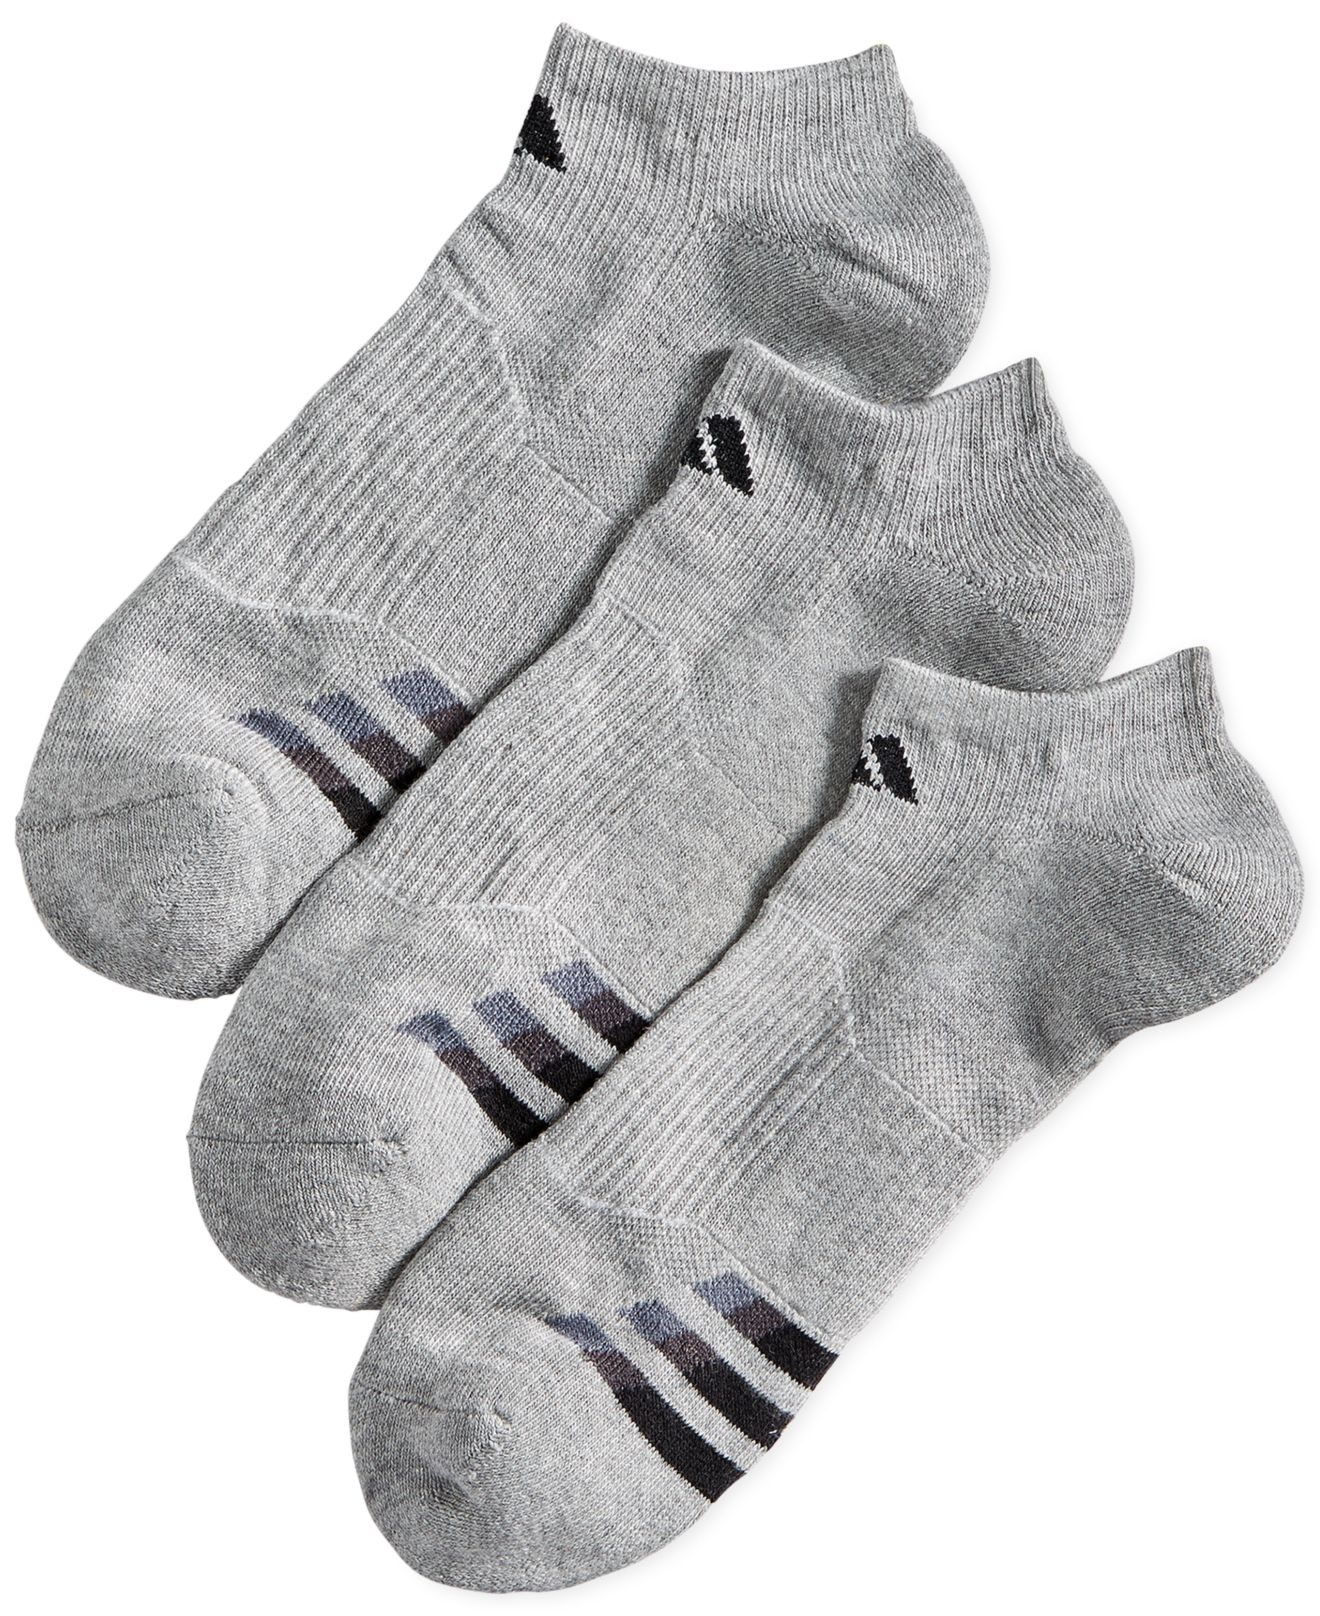 Adidas originals Men's Cushion Performance No-show Socks 3-pack in Gray ...